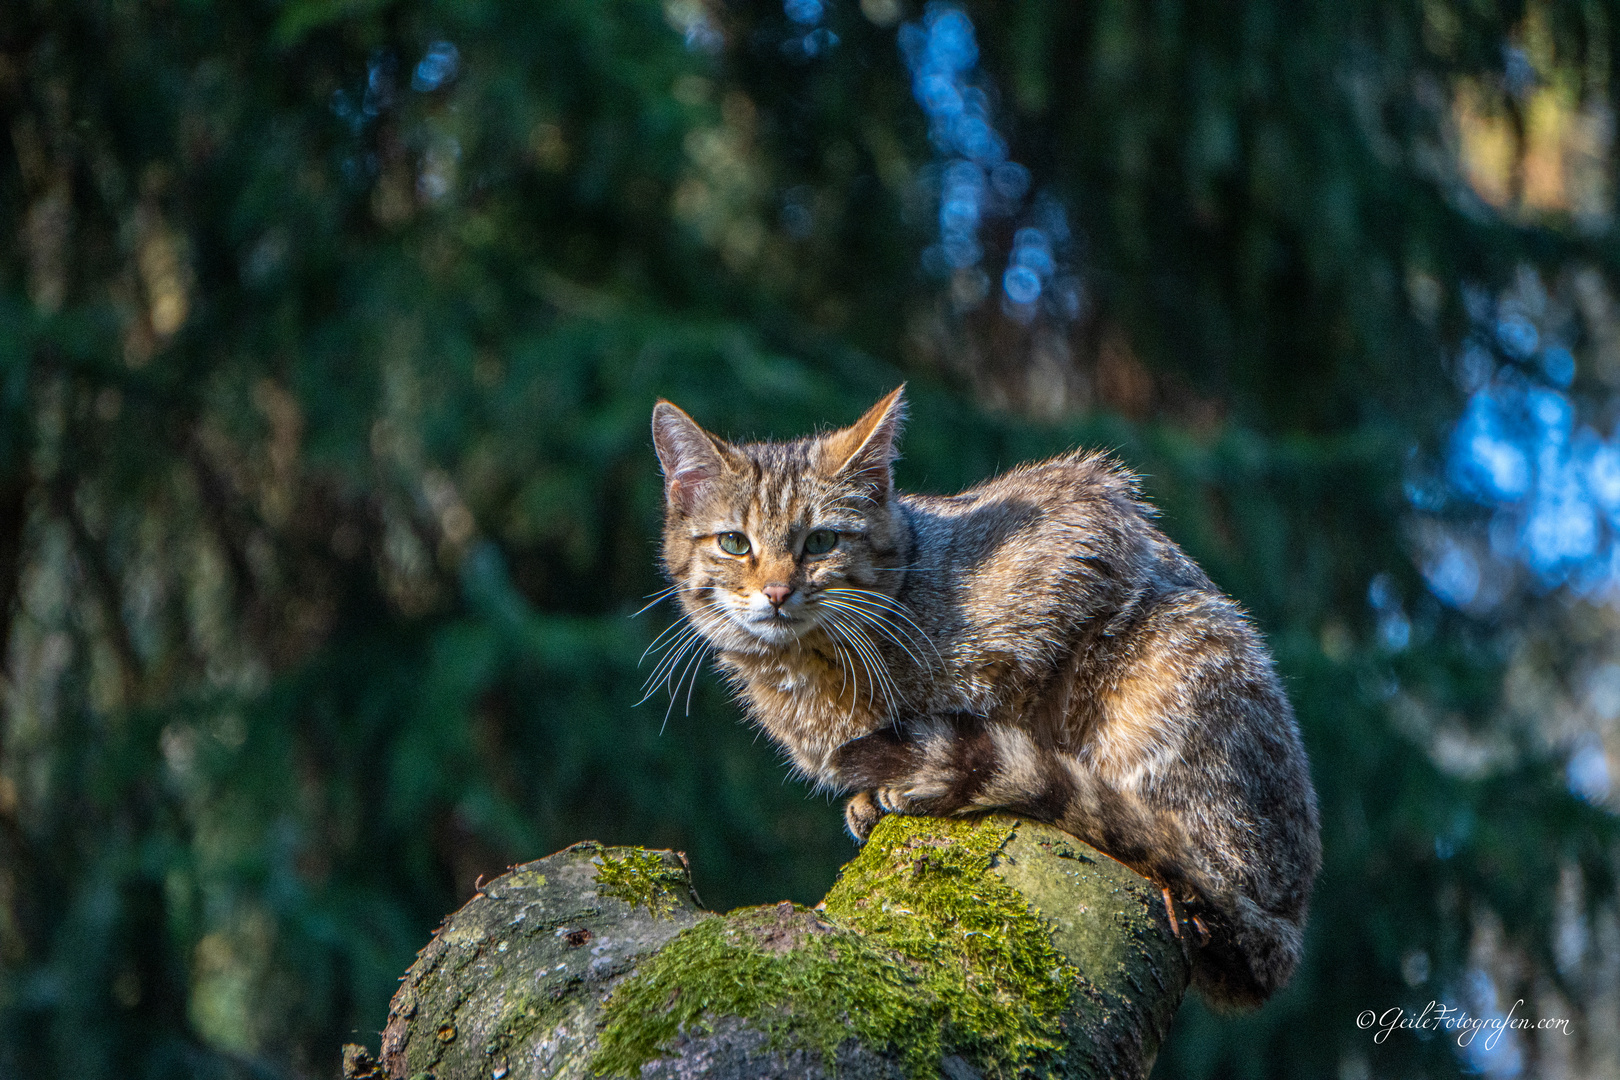 Wildkatze - Wildcat